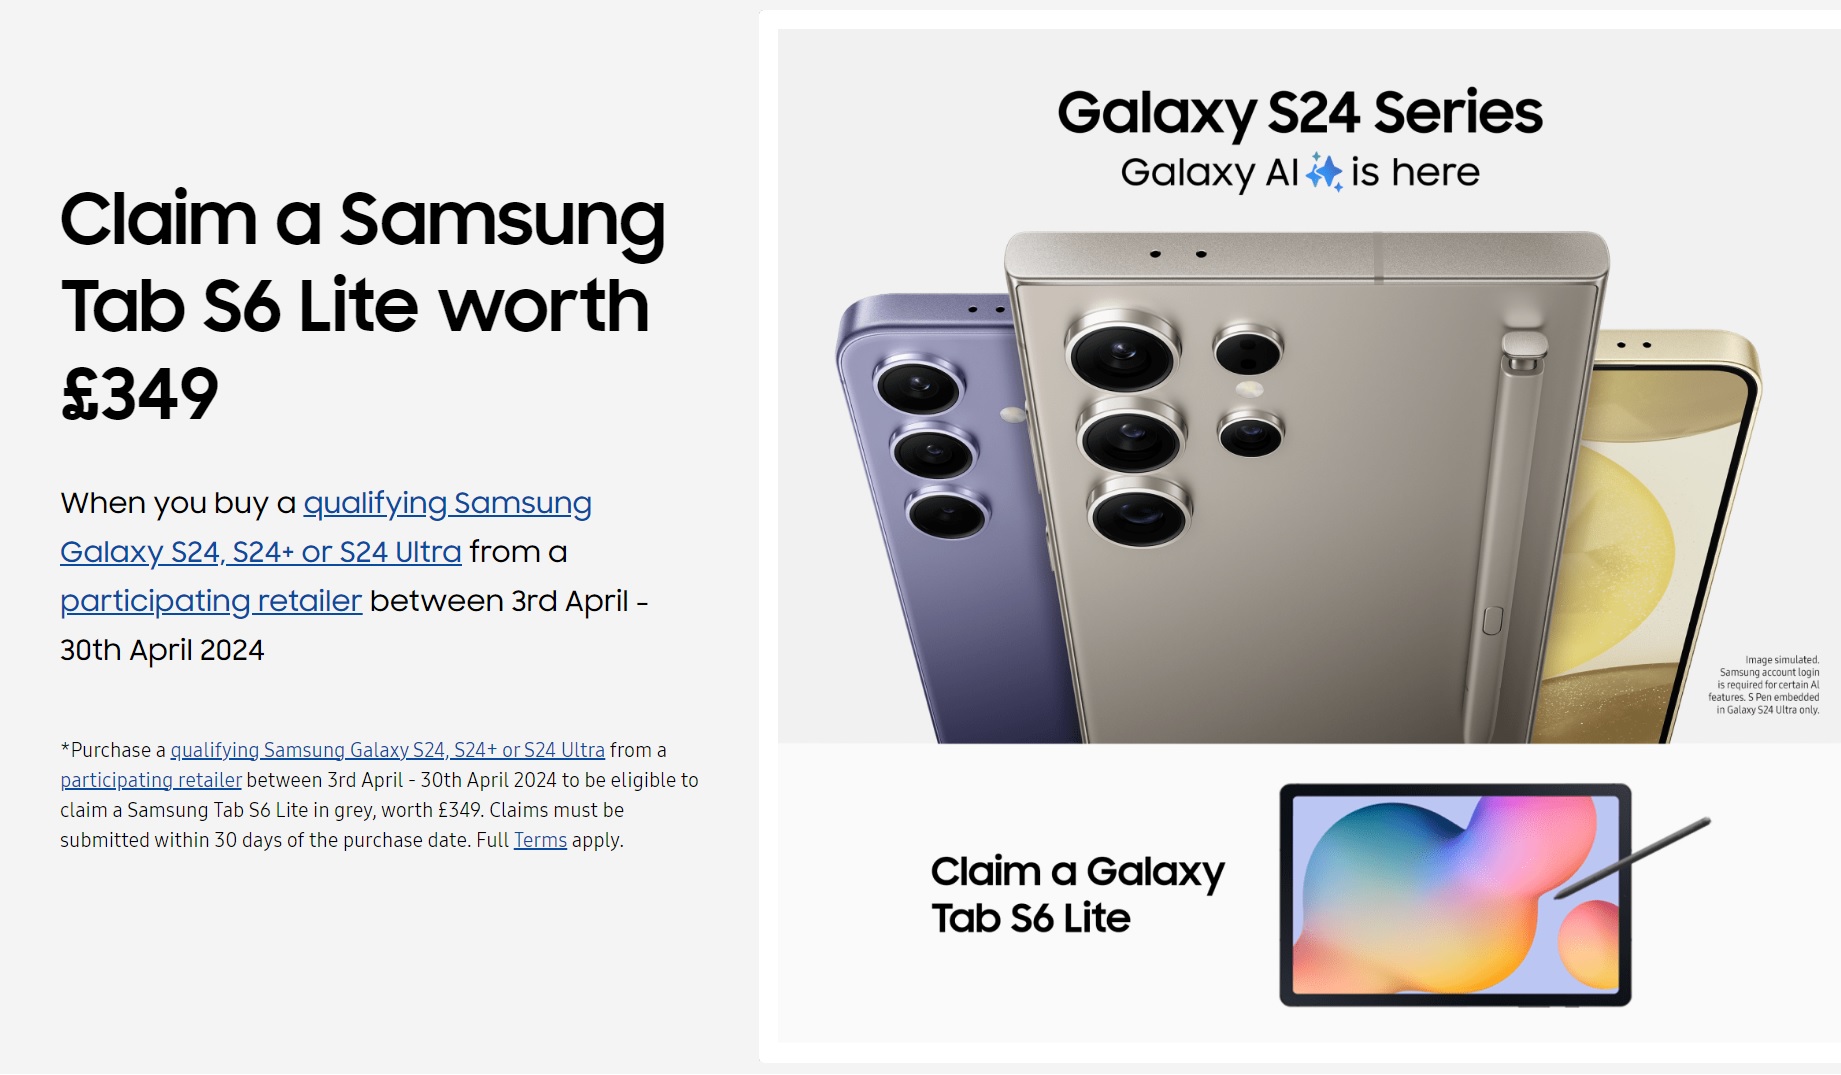 Claim a free Galaxy Tab S6 Lite with Samsung Galaxy S24+ deals